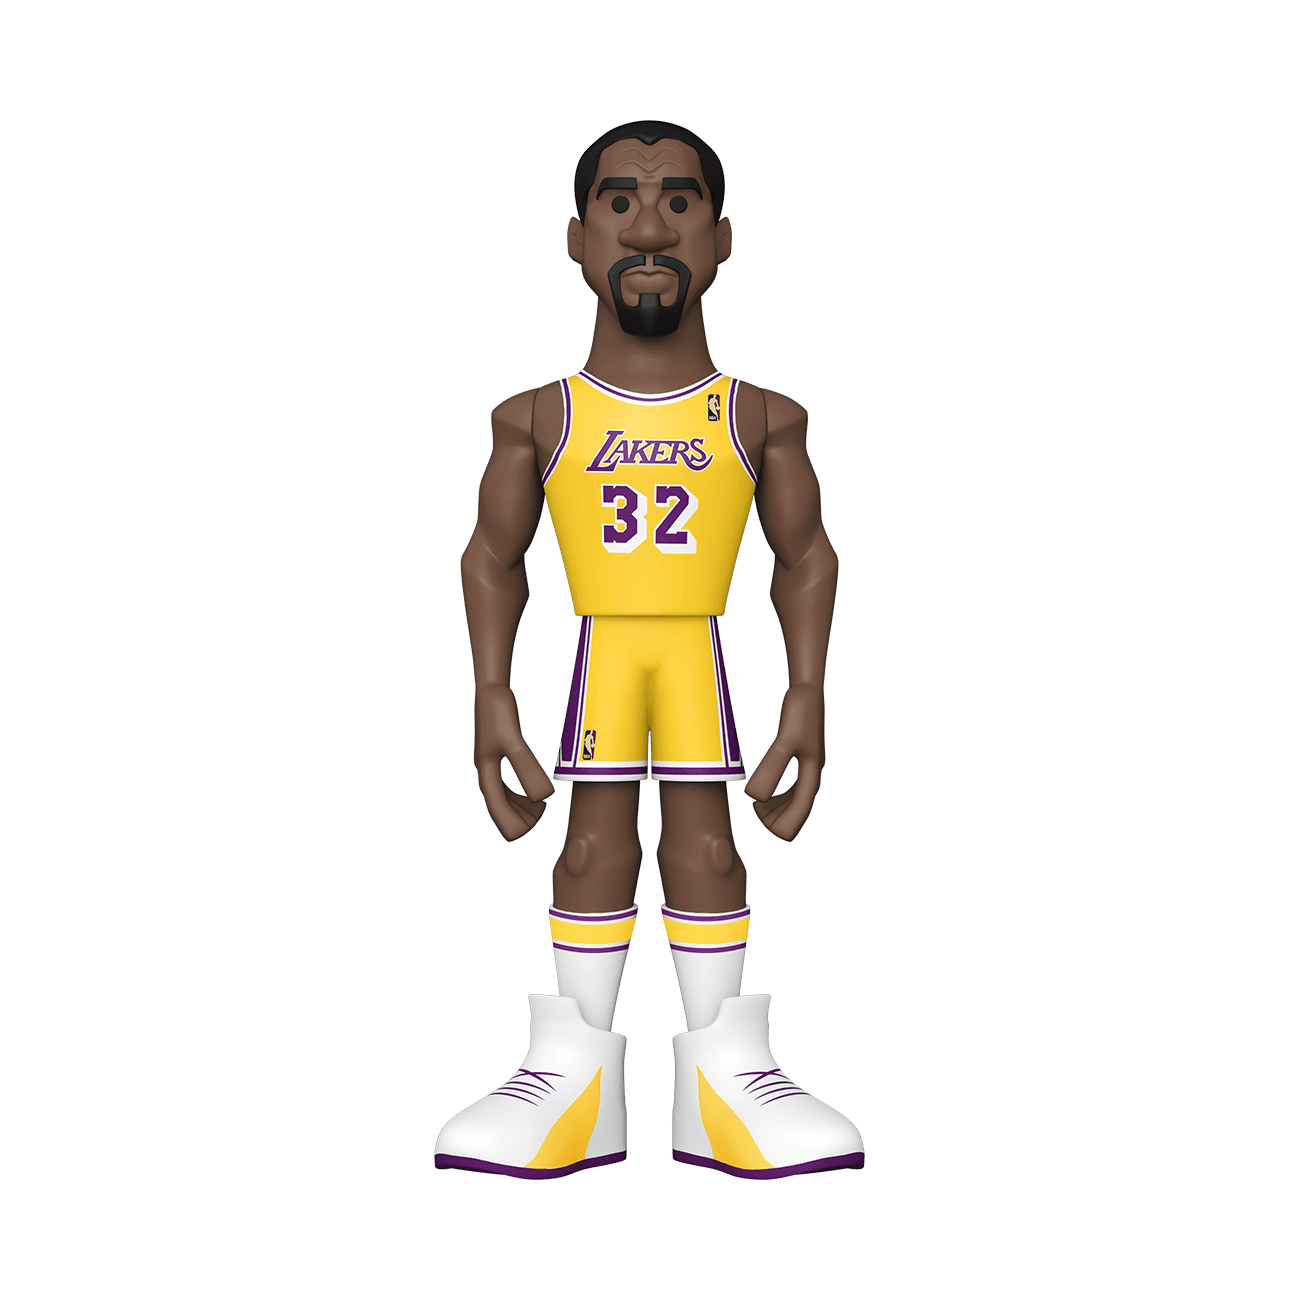 Magic Johnson (Los Angeles Lakers) Funko Gold NBA Legends 5 - CLARKtoys